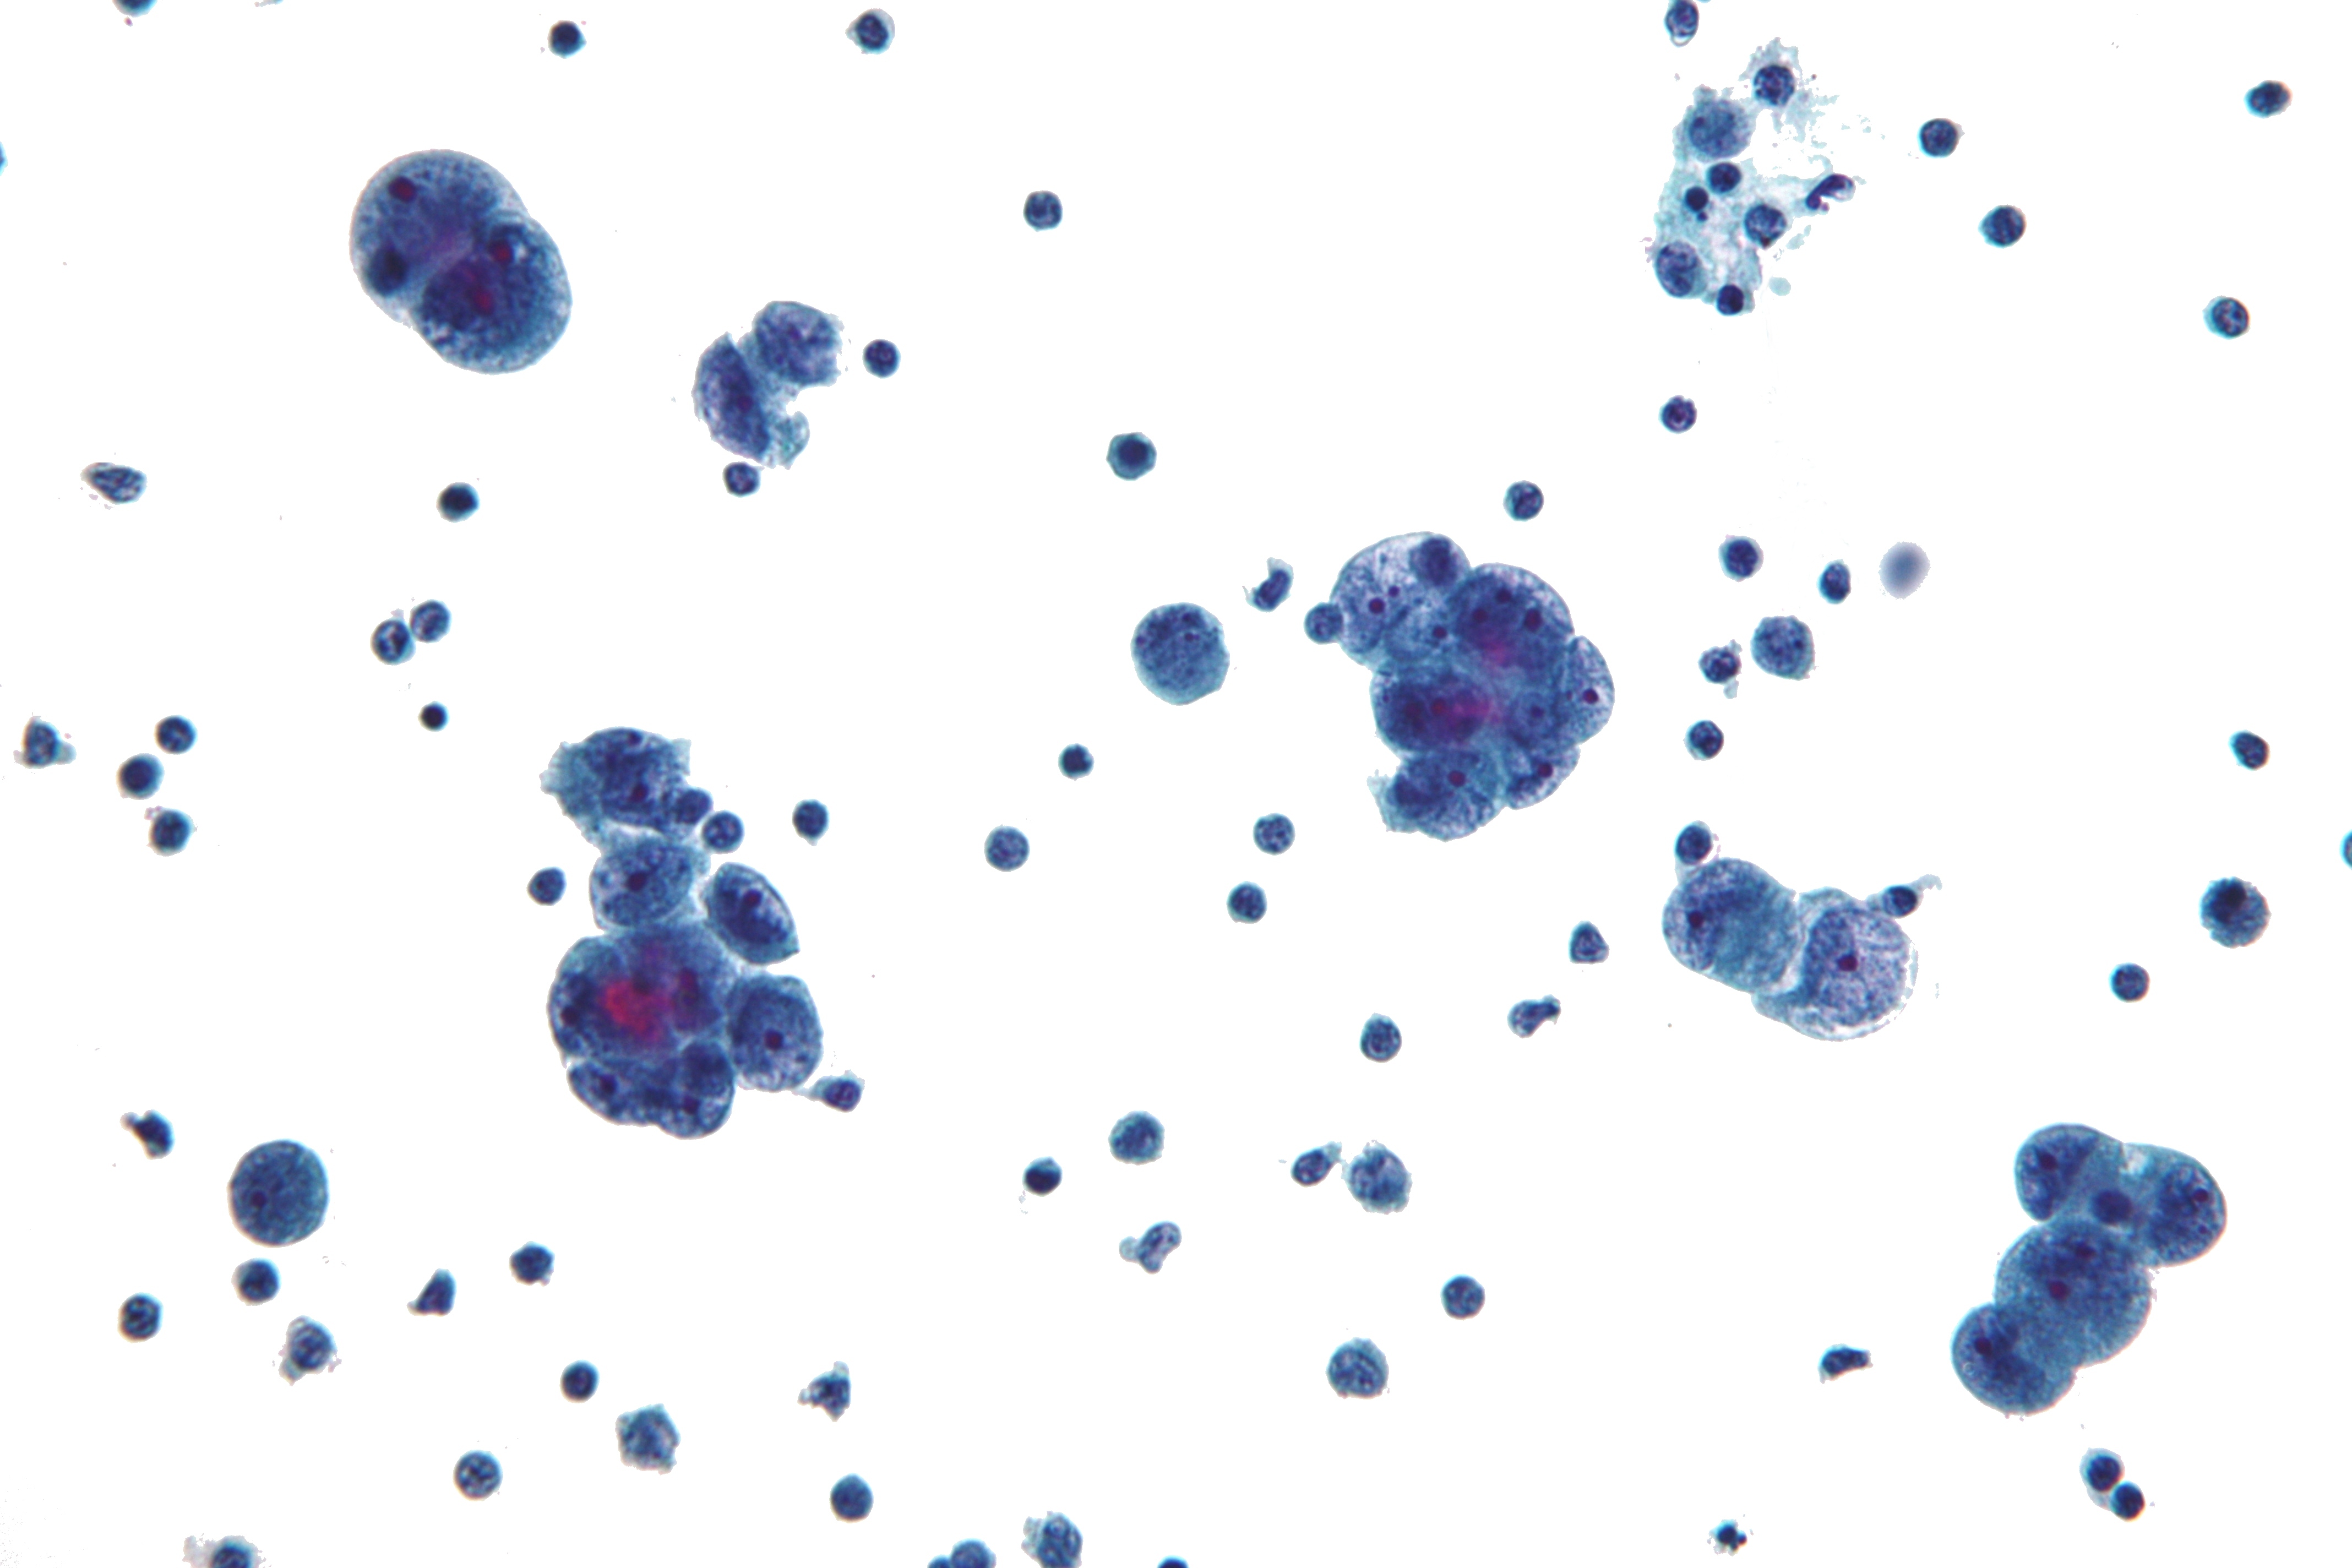 File:Serous carcinoma cytology.jpg